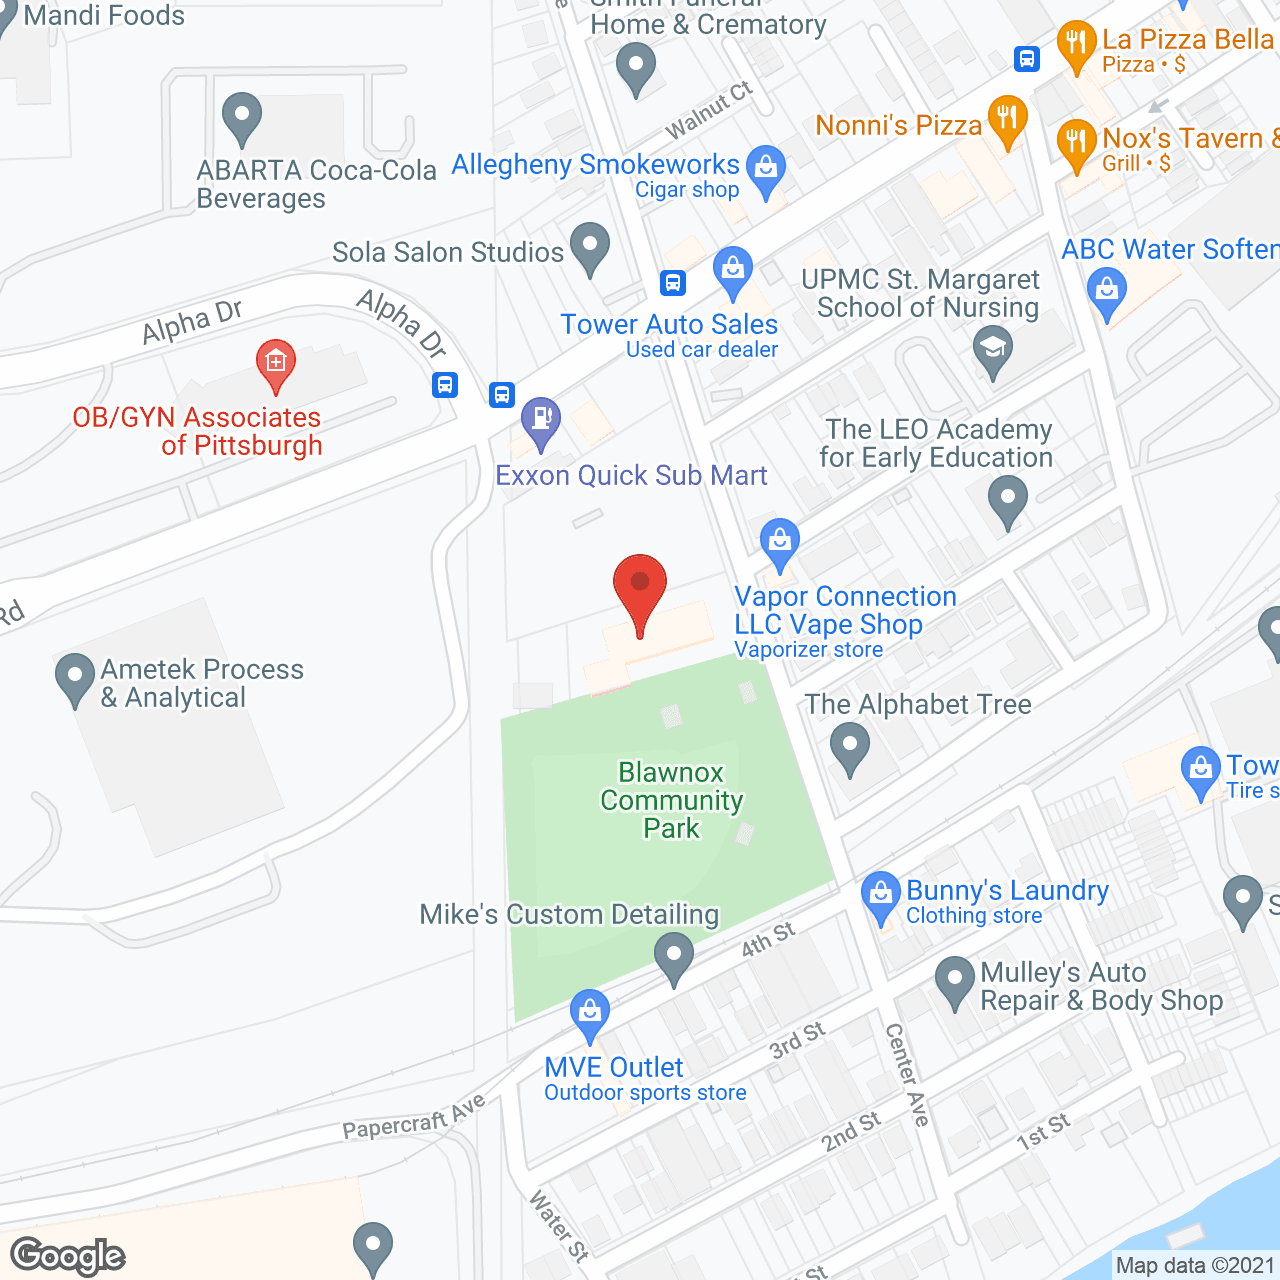 Blawnox Manor in google map